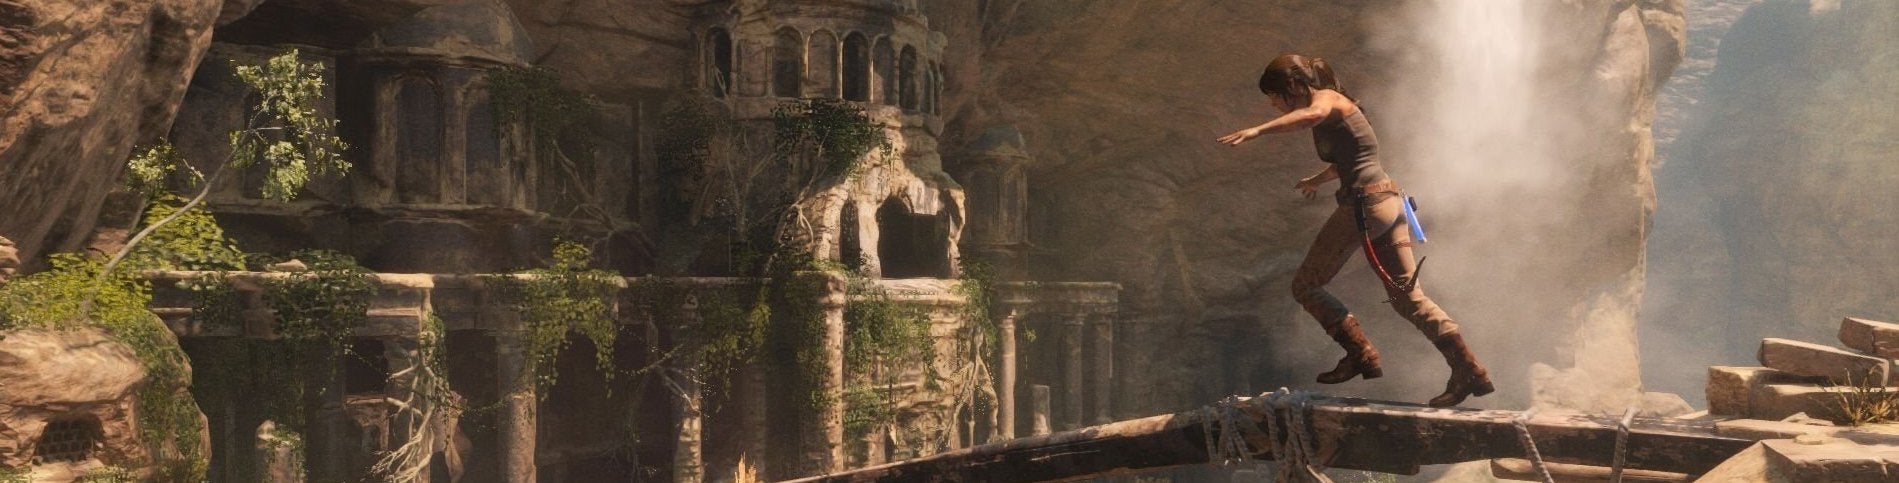 Image for Rise of the Tomb Raider brings back Lara's sense of adventure